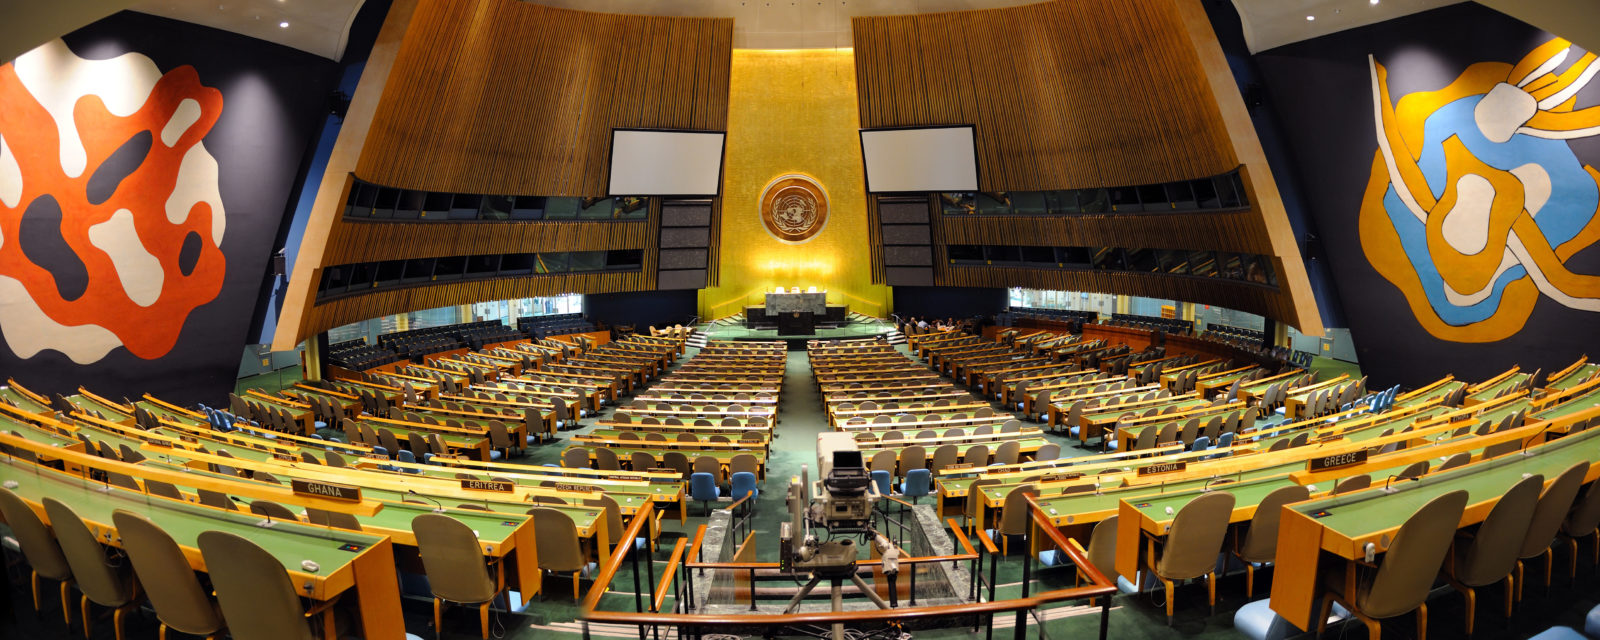 U.N. Assembly room - Songquan Deng / Shutterstock.com